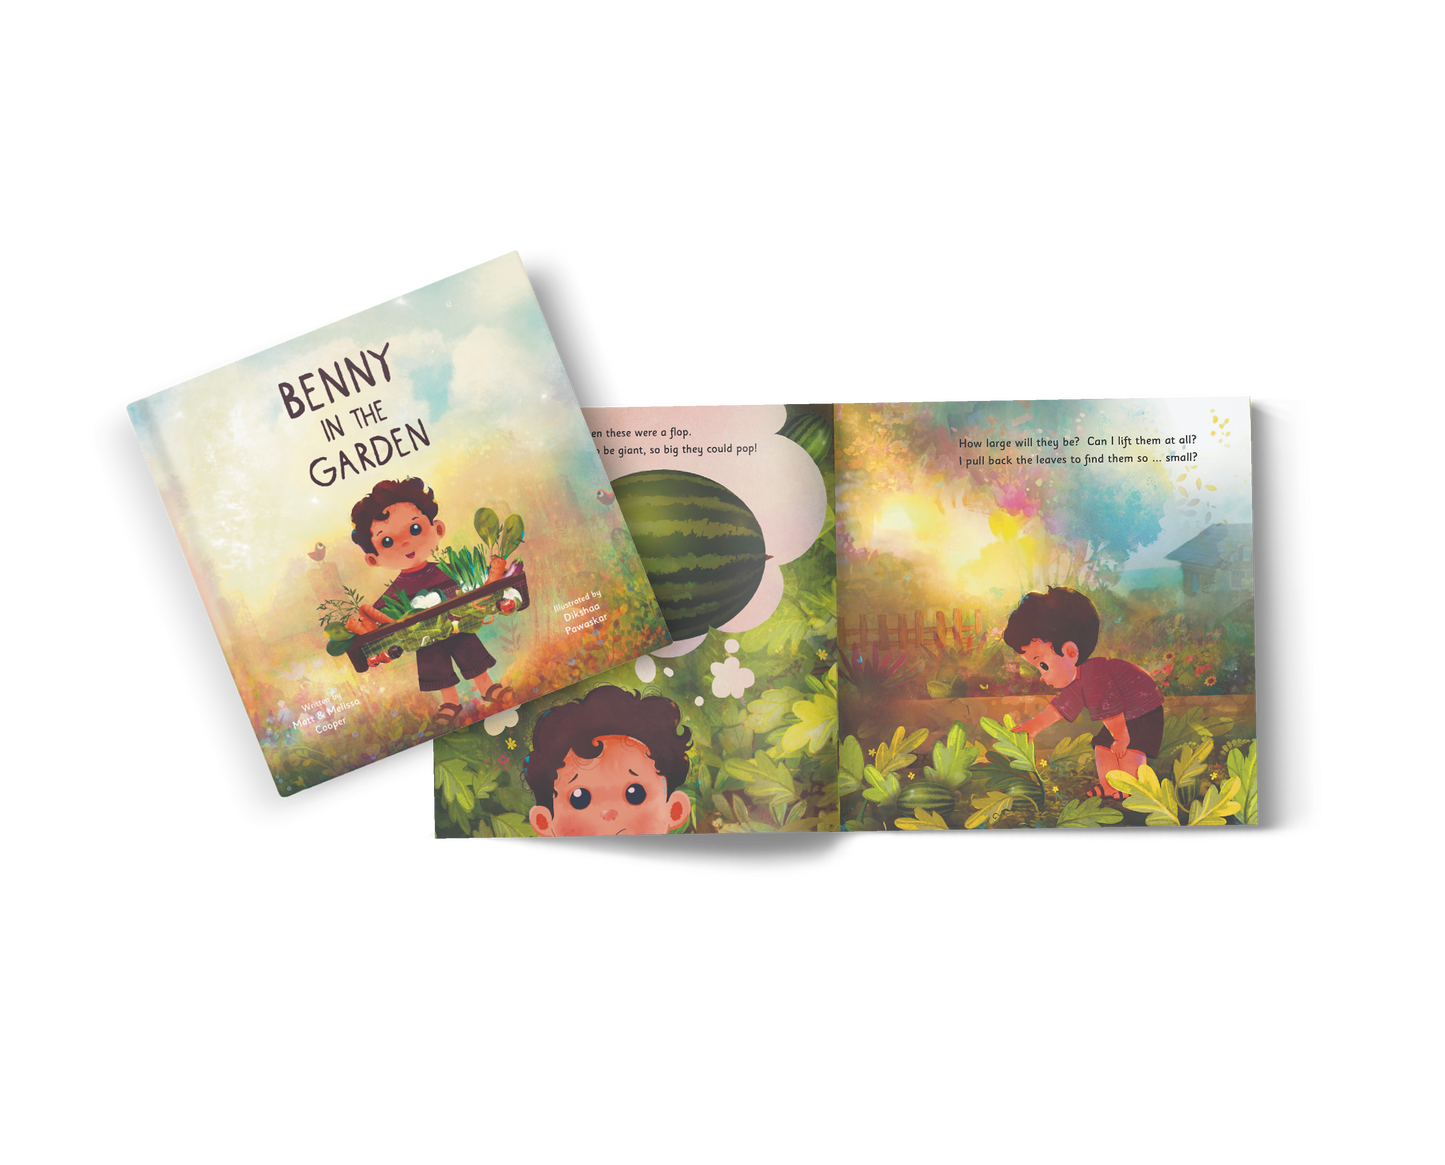 "Benny In The Garden" Hardcover & Coloring Book Bundle